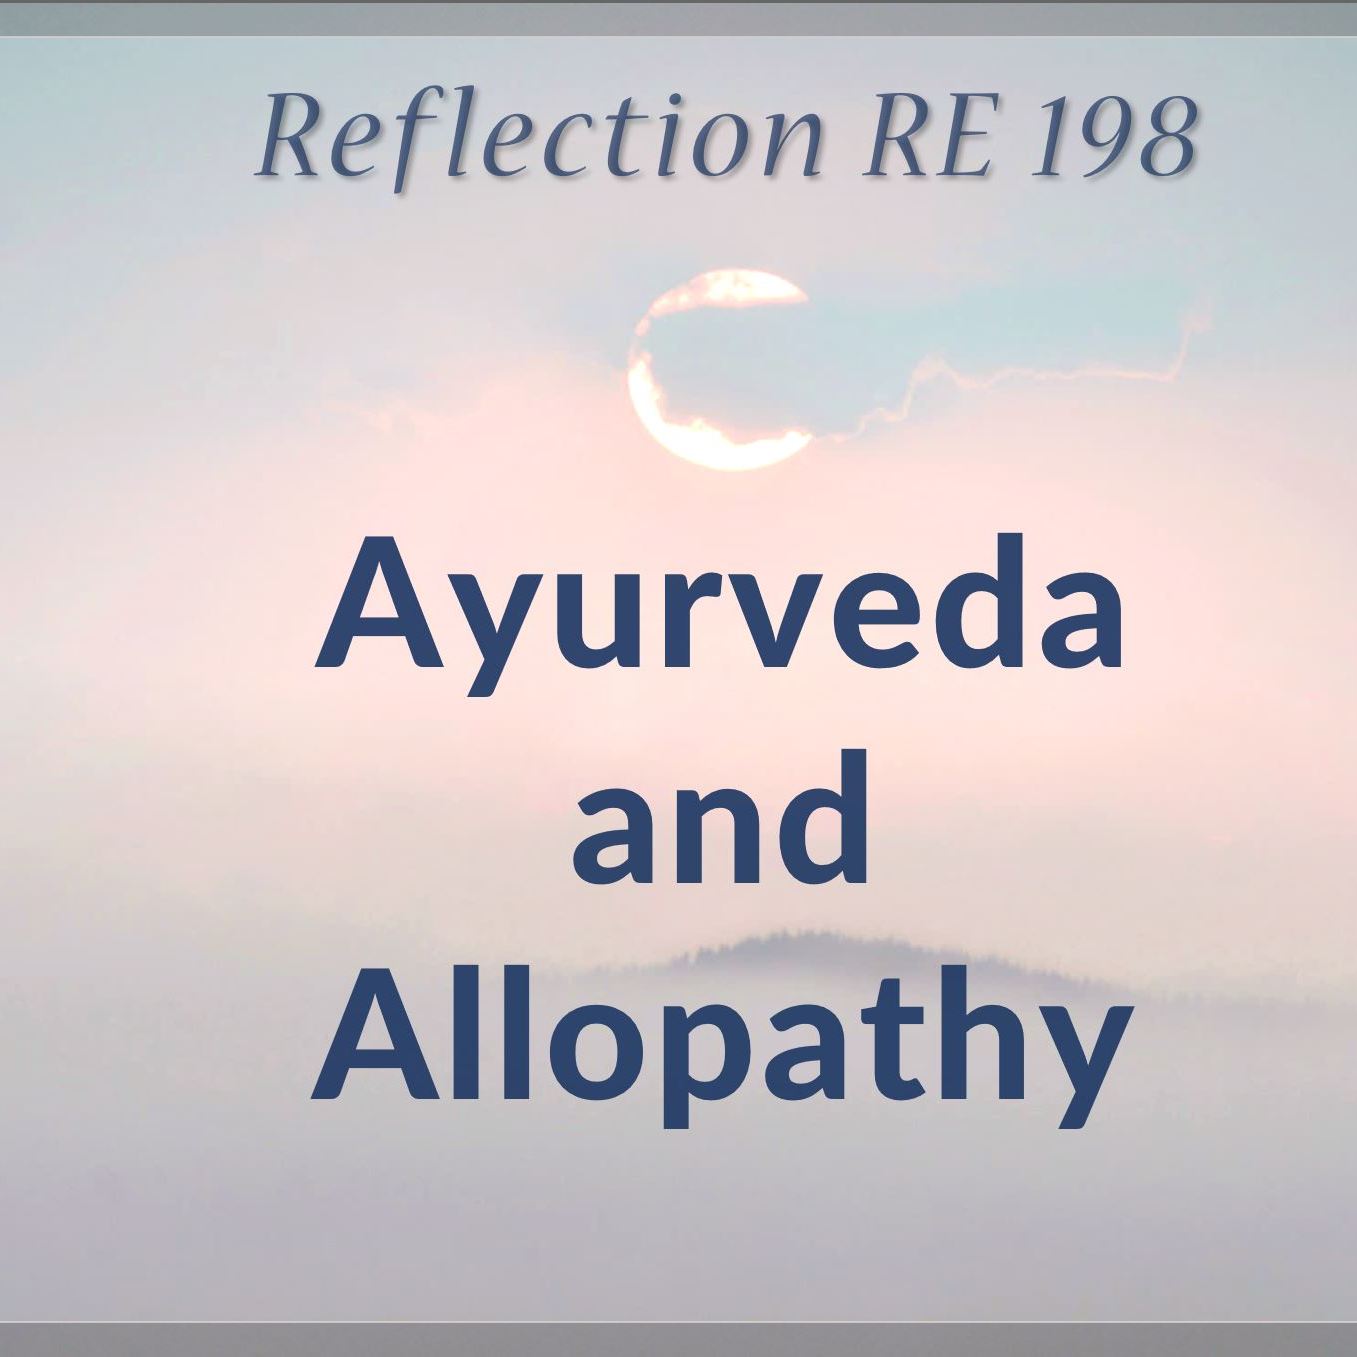 Ayurveda and Allopathy  |  RE 198